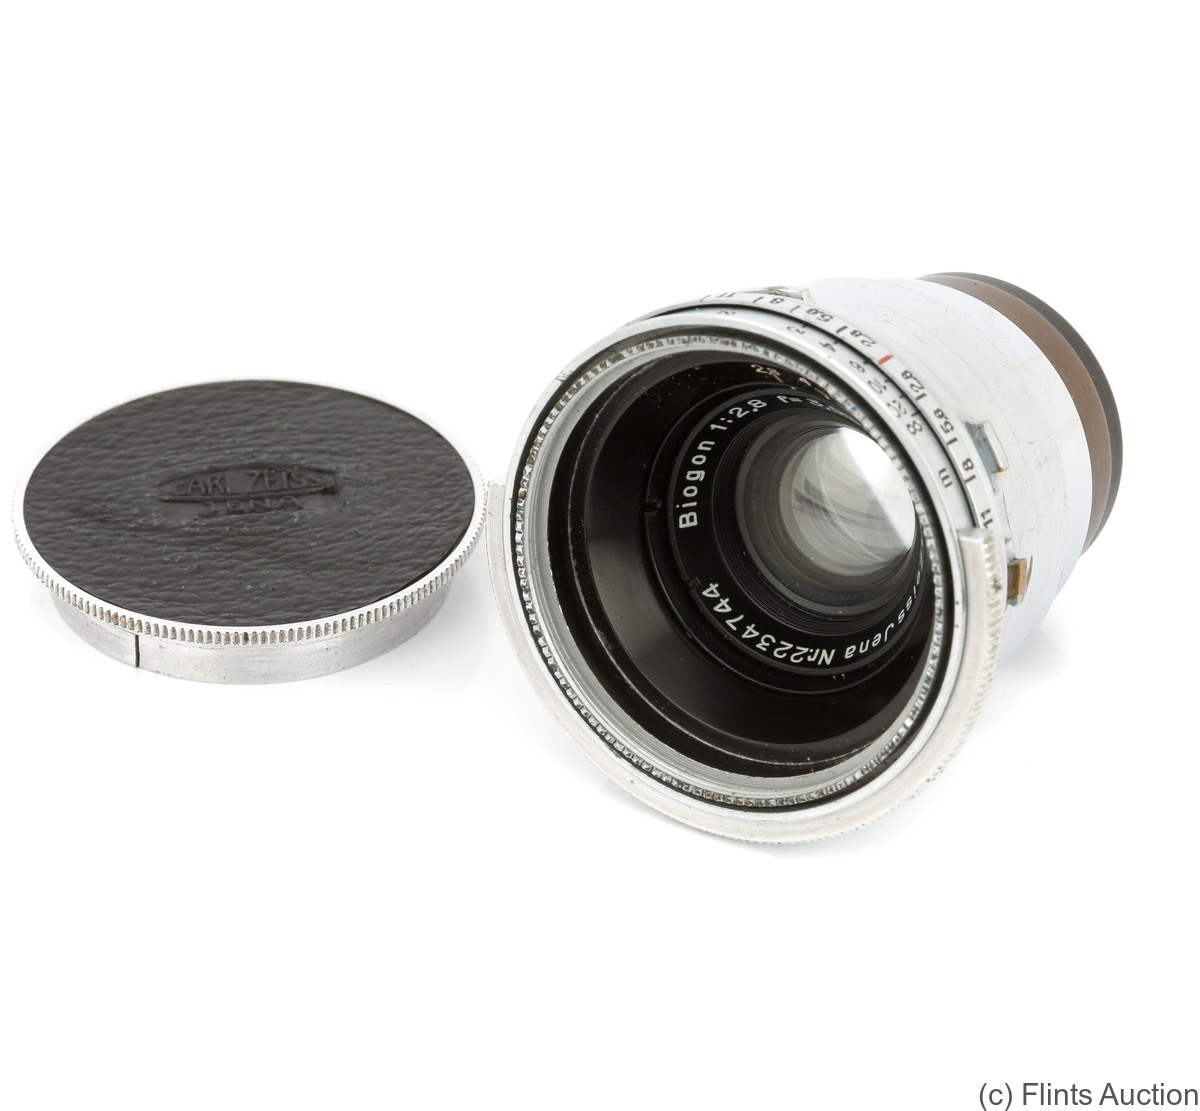 Zeiss, Carl: 35mm (3.5cm) f2.8 Biogon (сontaflex) camera